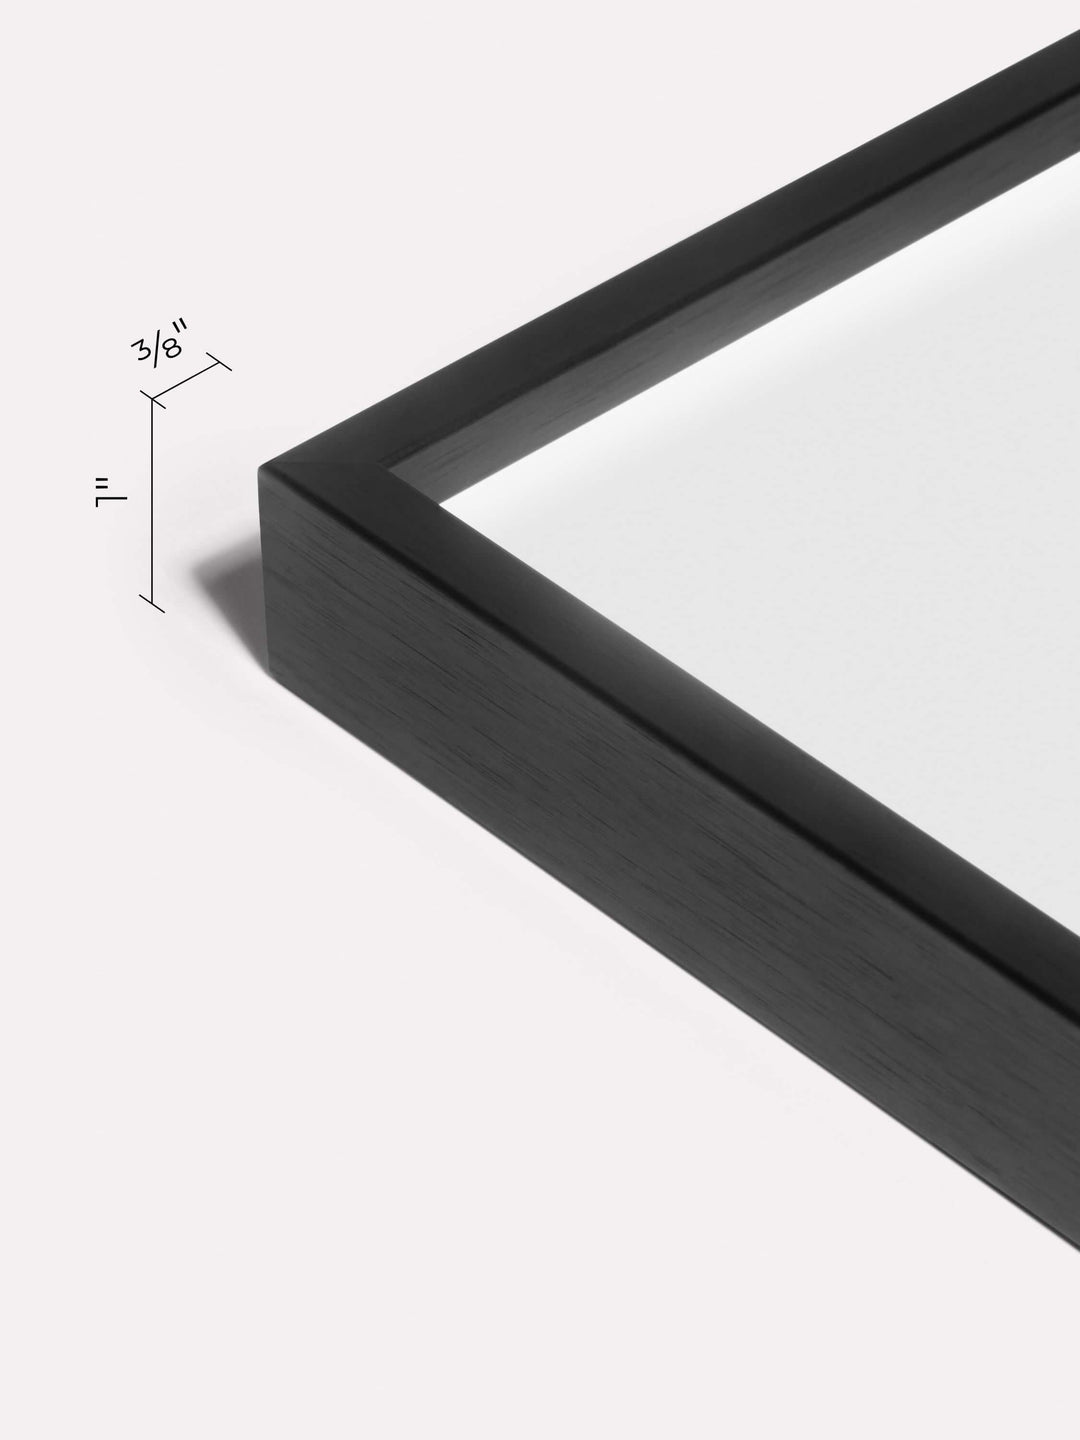 24x24-inch Thin Frame, Black - Close-up view